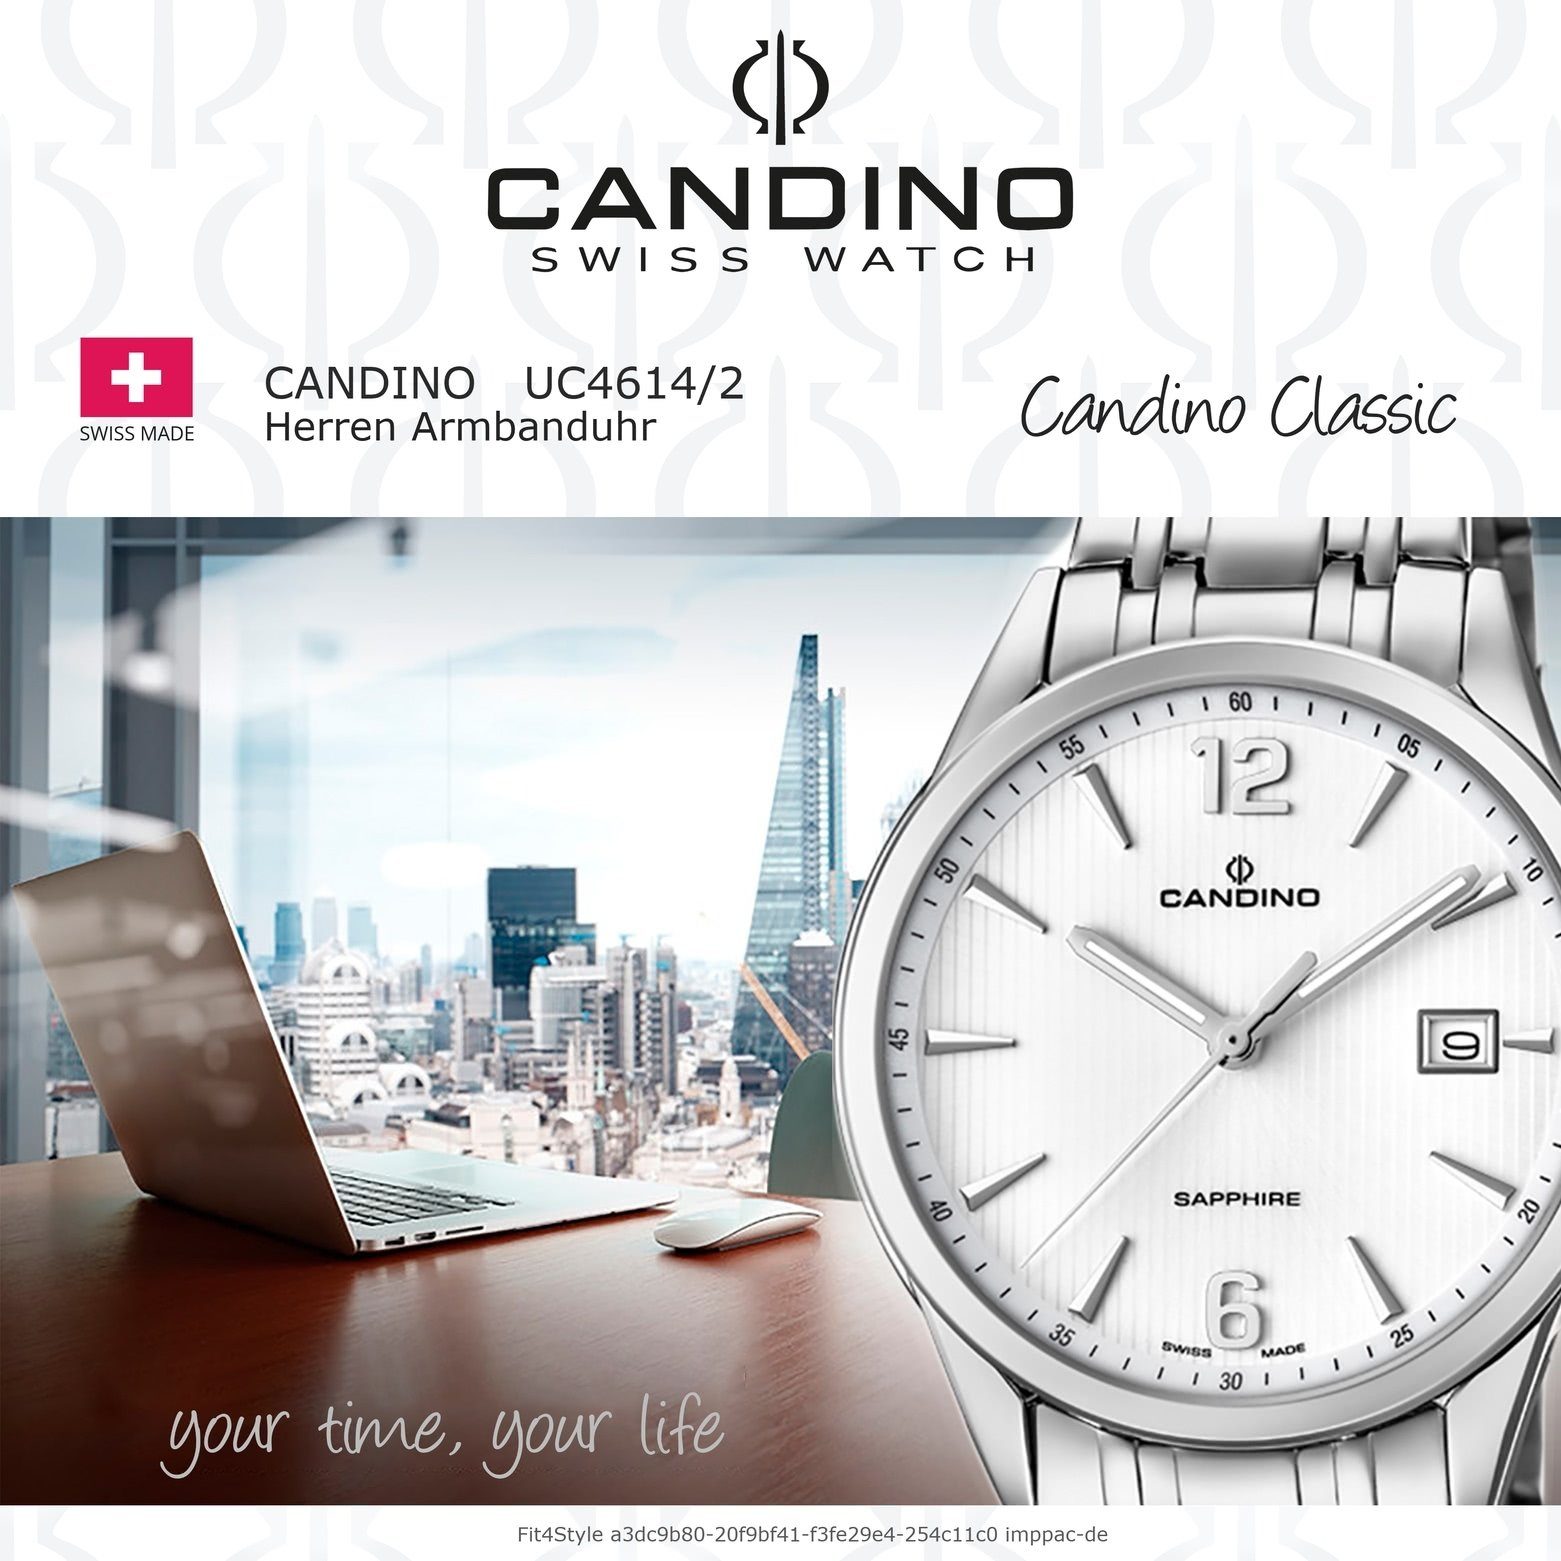 Edelstahlarmband Candino Herren C4614/2, Candino Quarzuhr Analog Armbanduhr Uhr Herren silber, Elegant rund,